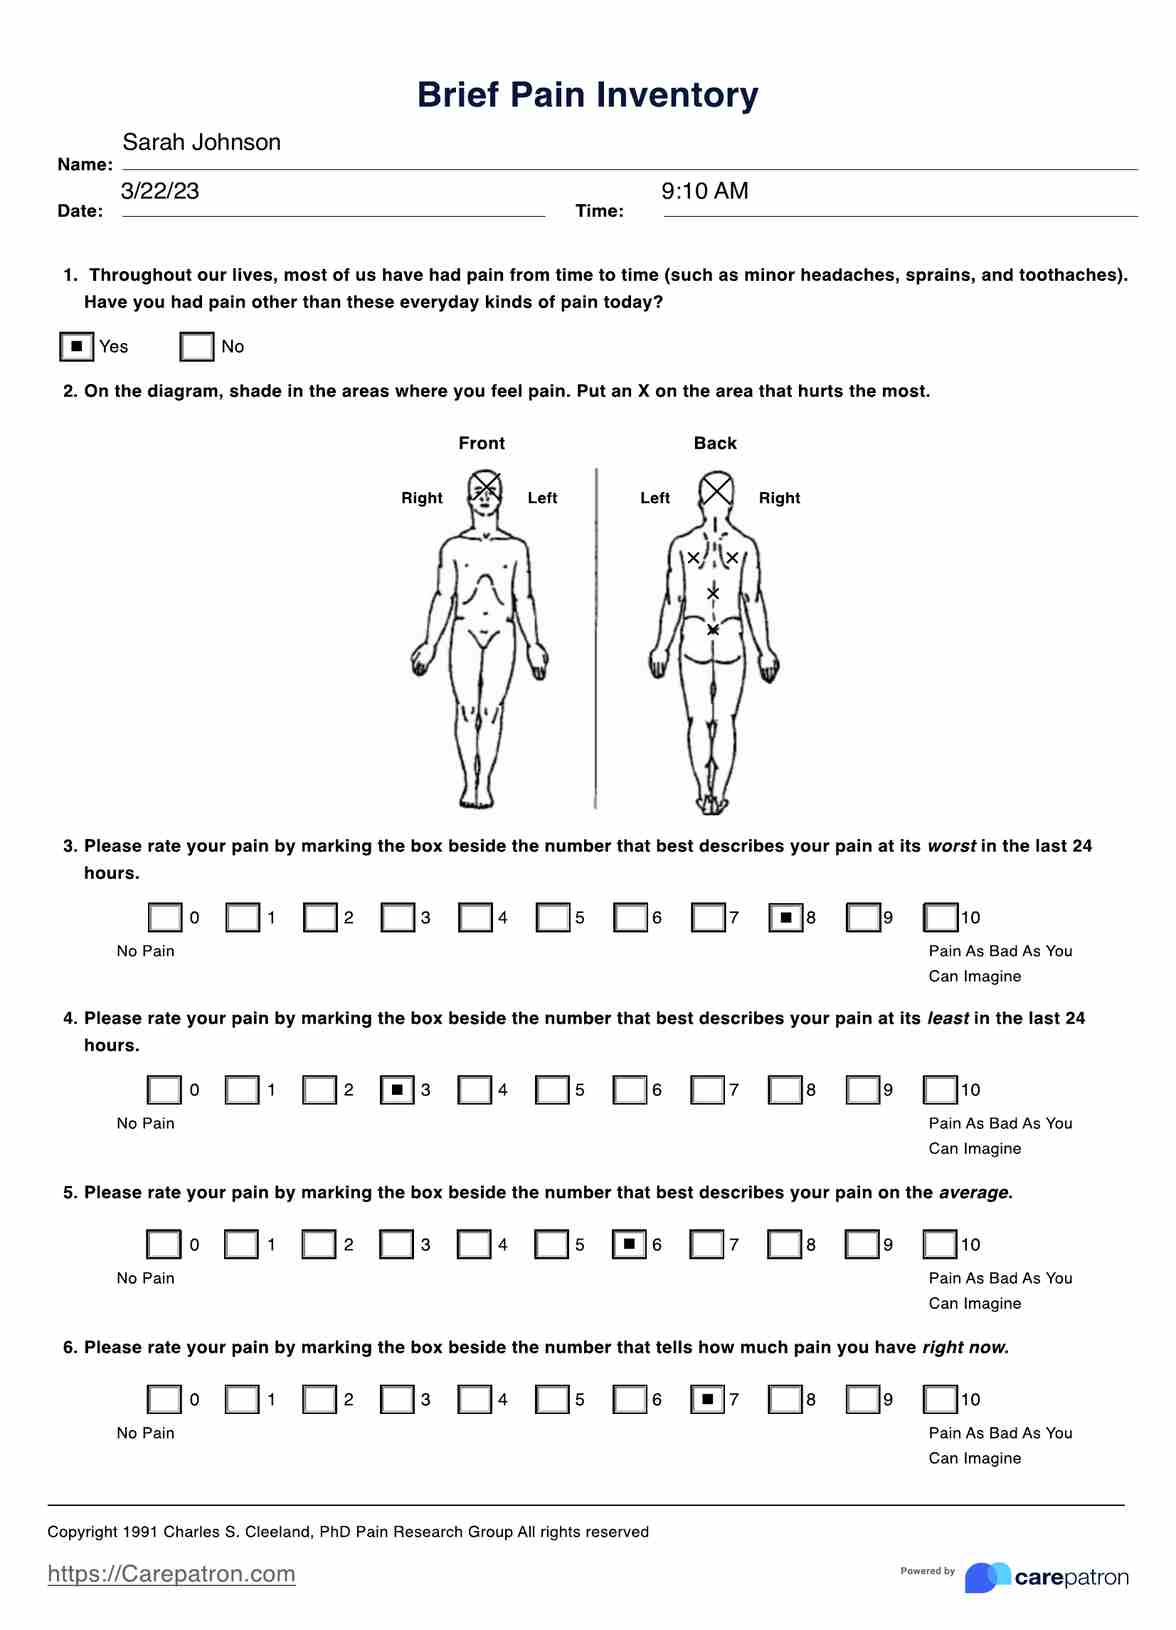 Brief Pain Inventory PDF Example